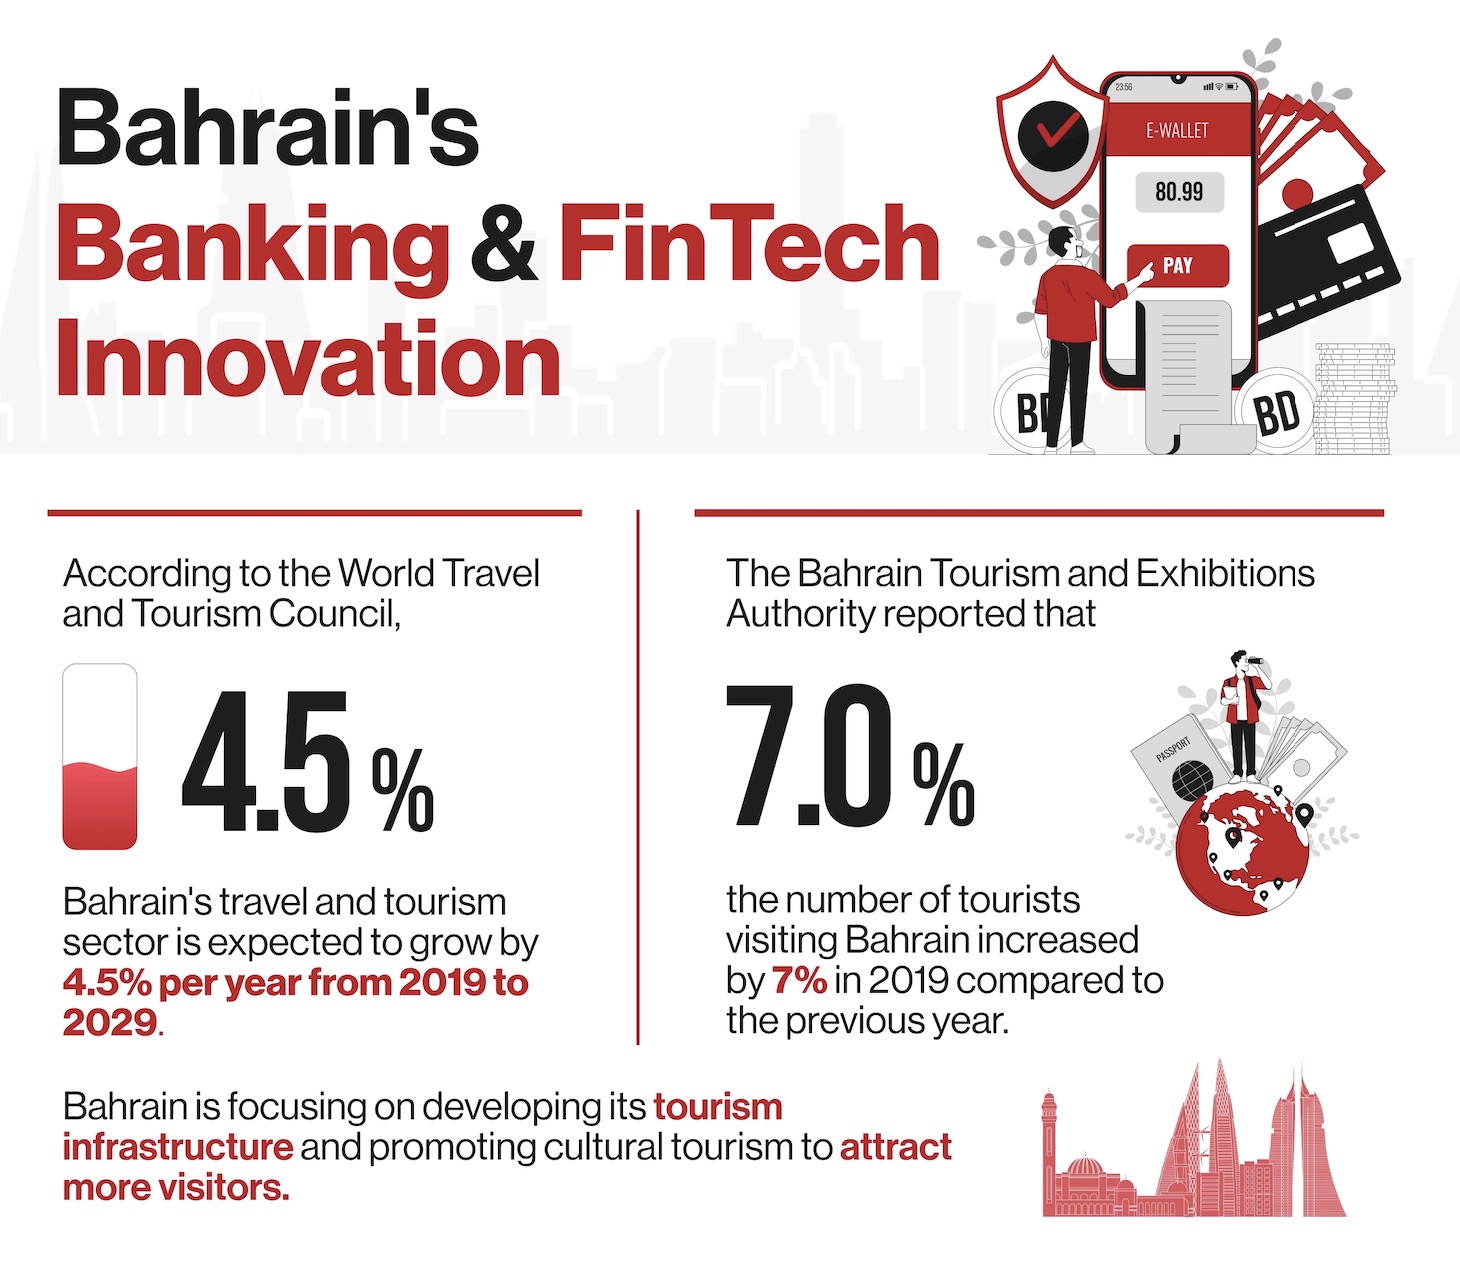 bahrains_banking_fintech1